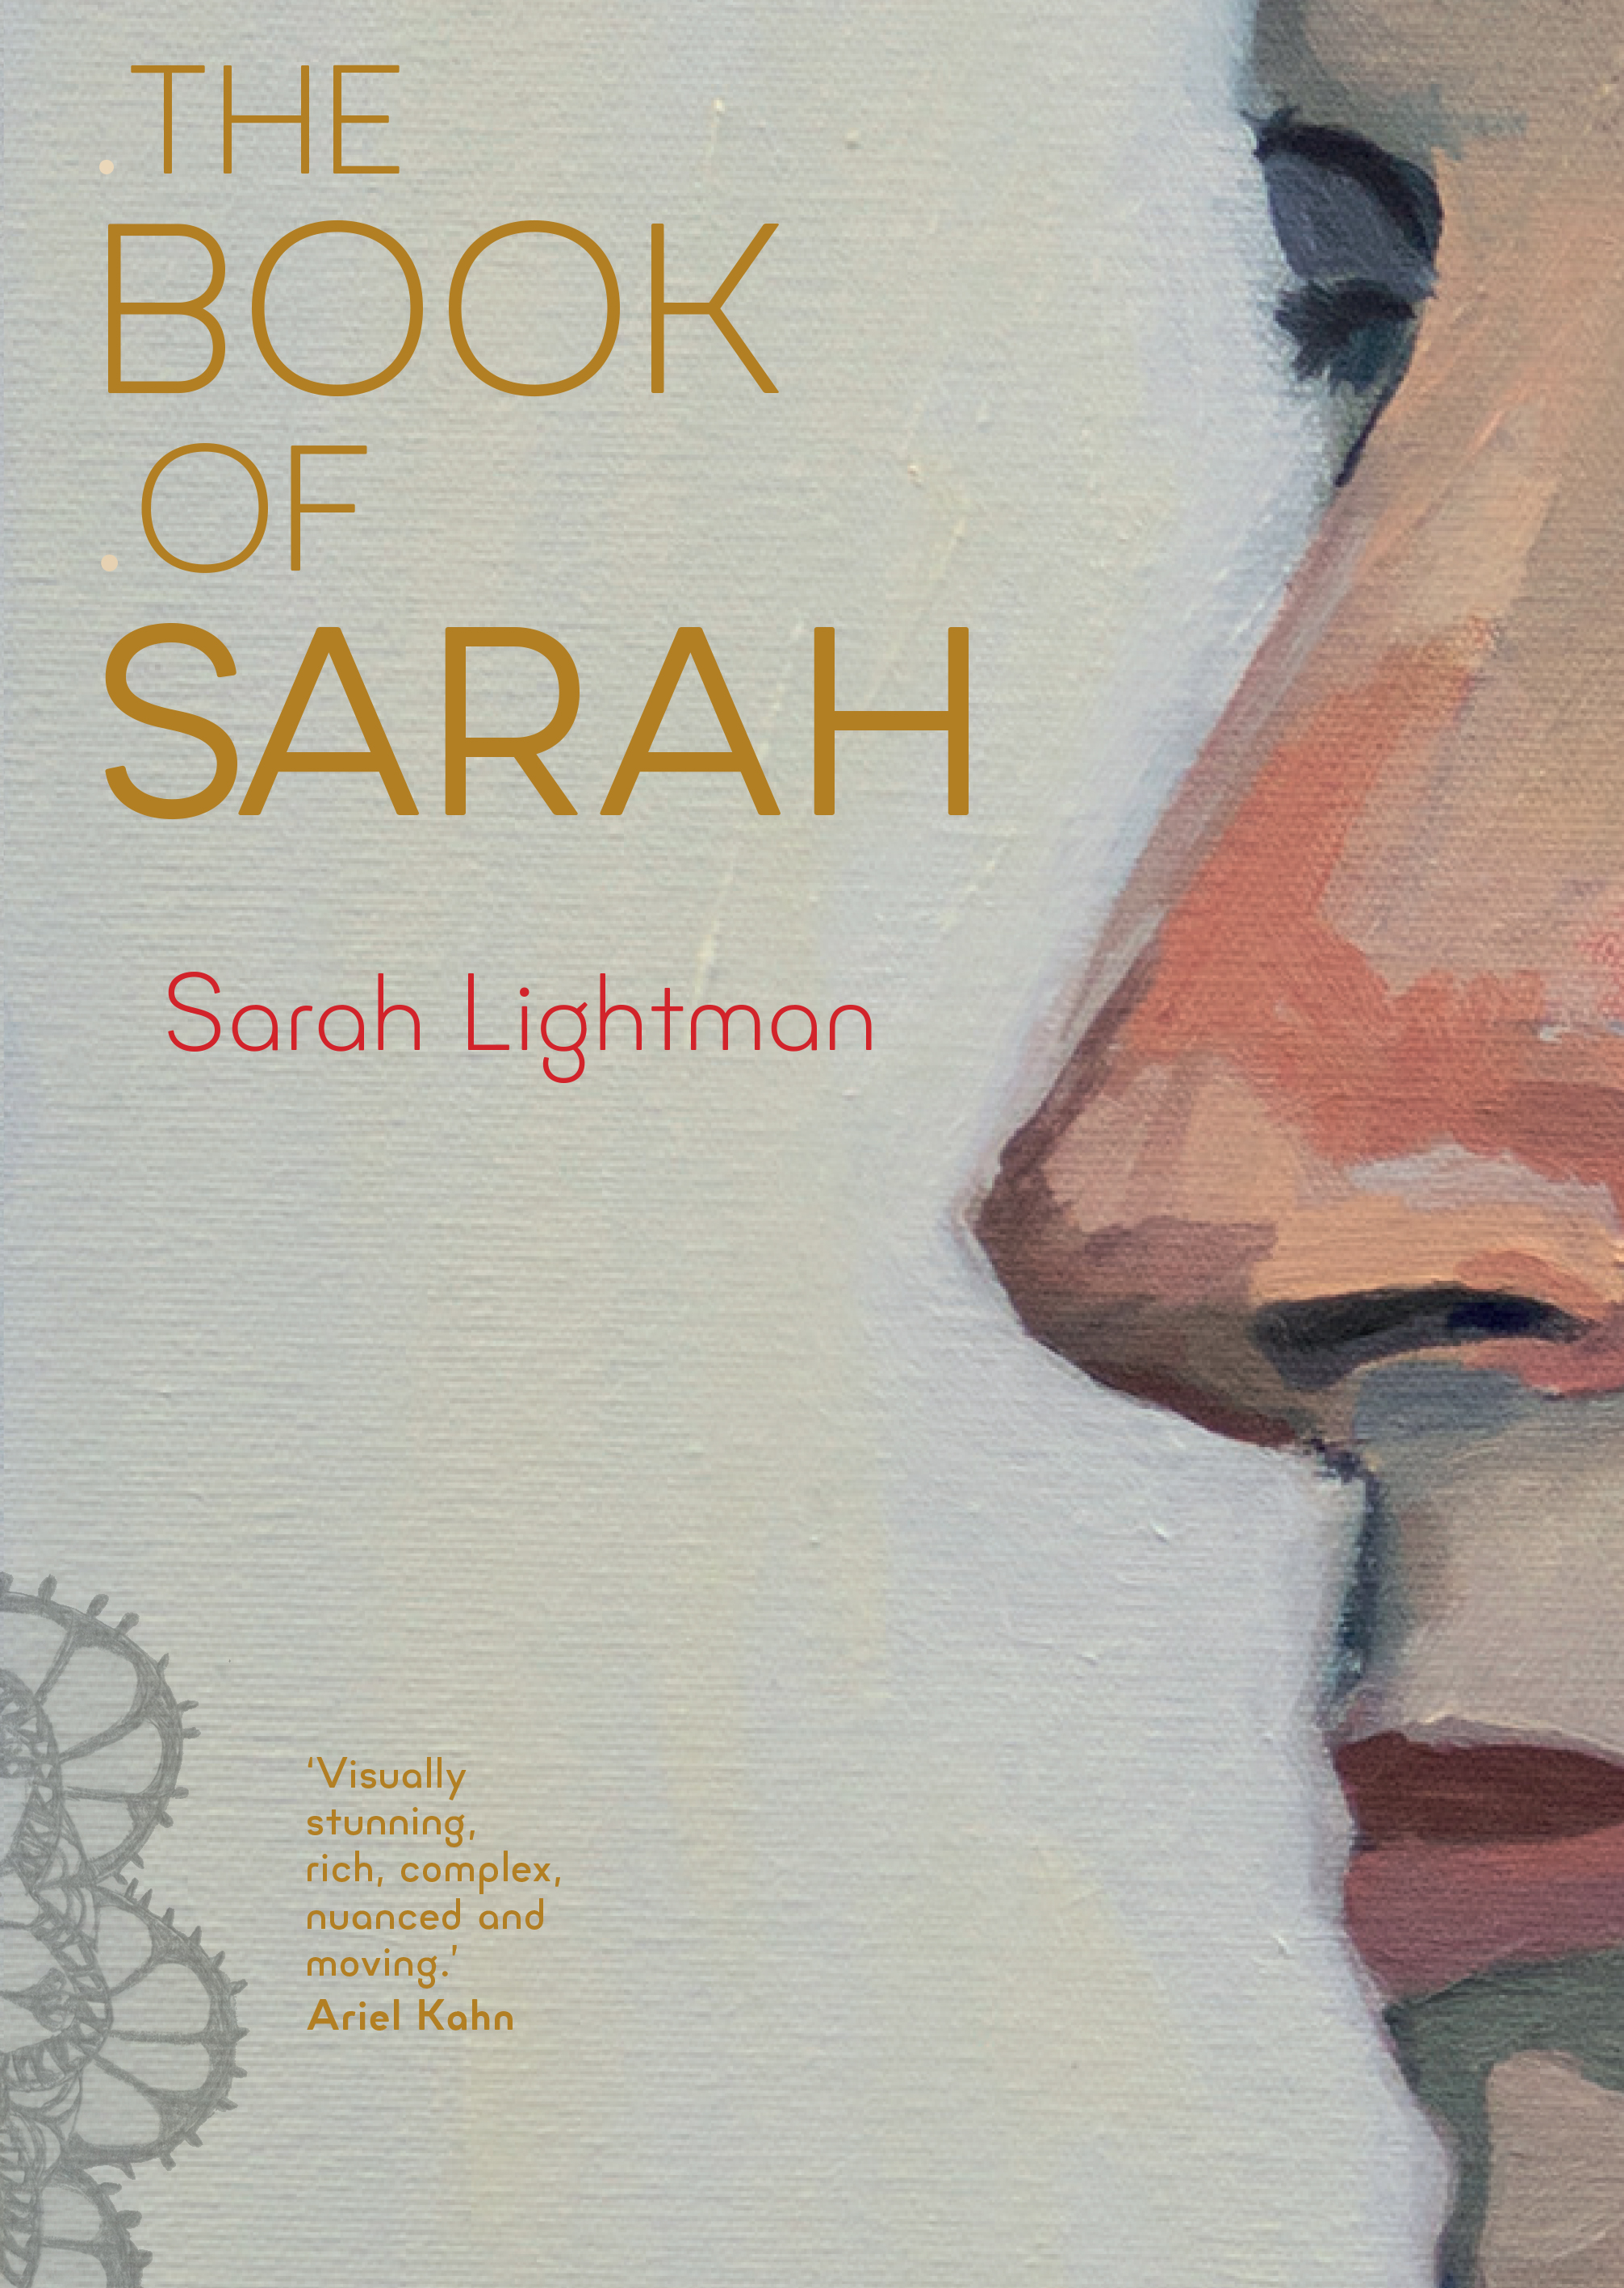 Image result for sarah lightman book of sarah